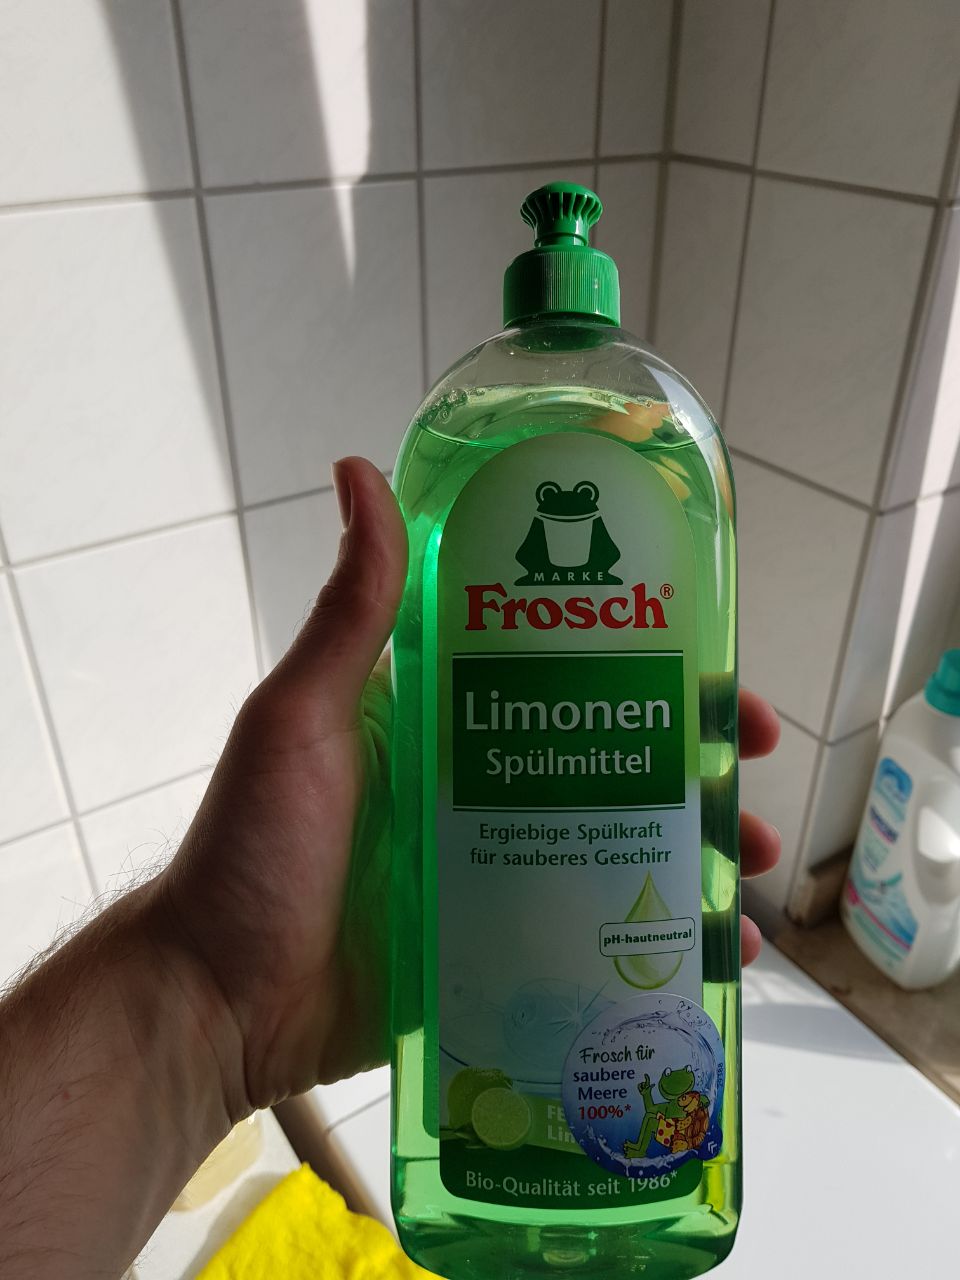 Frosch Limonen Spülmittel